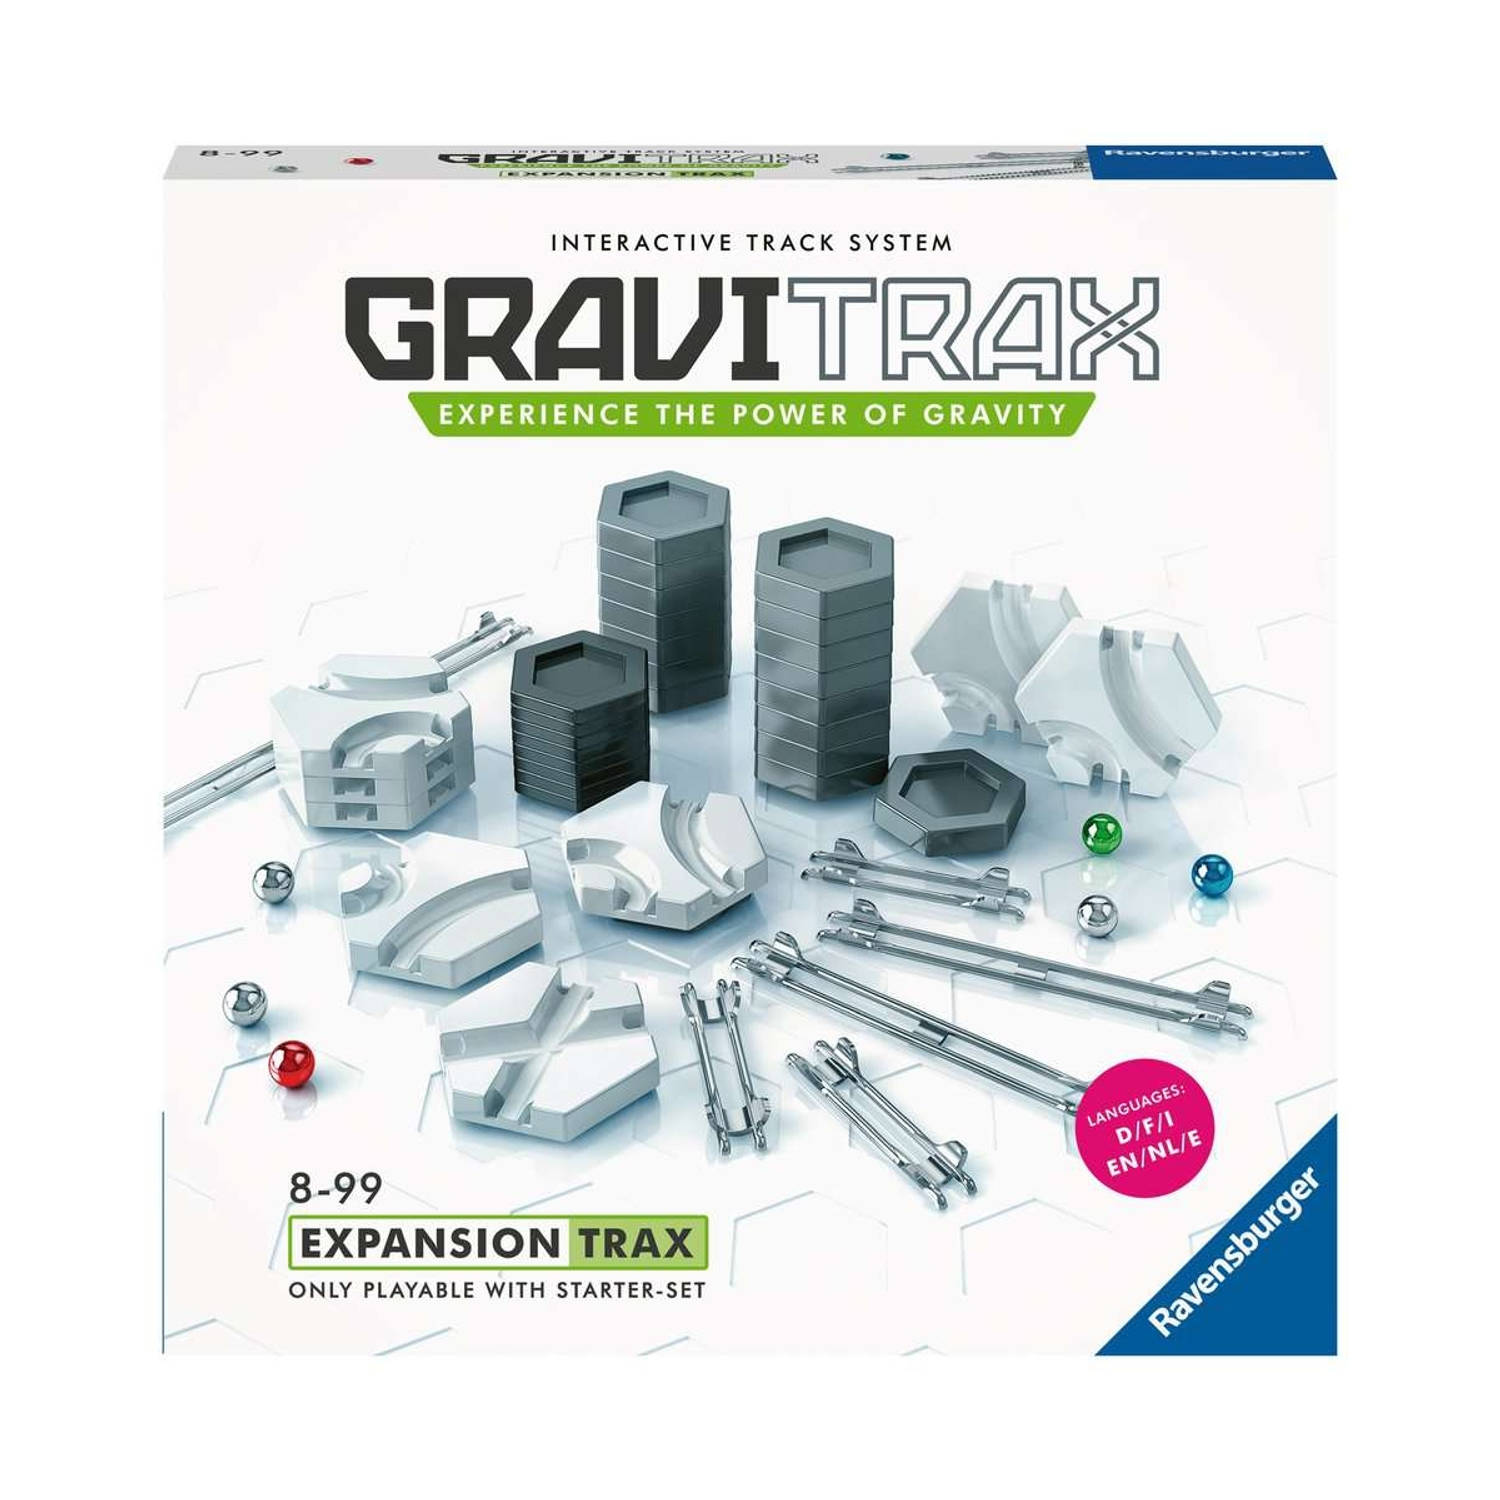 GraviTrax tracks